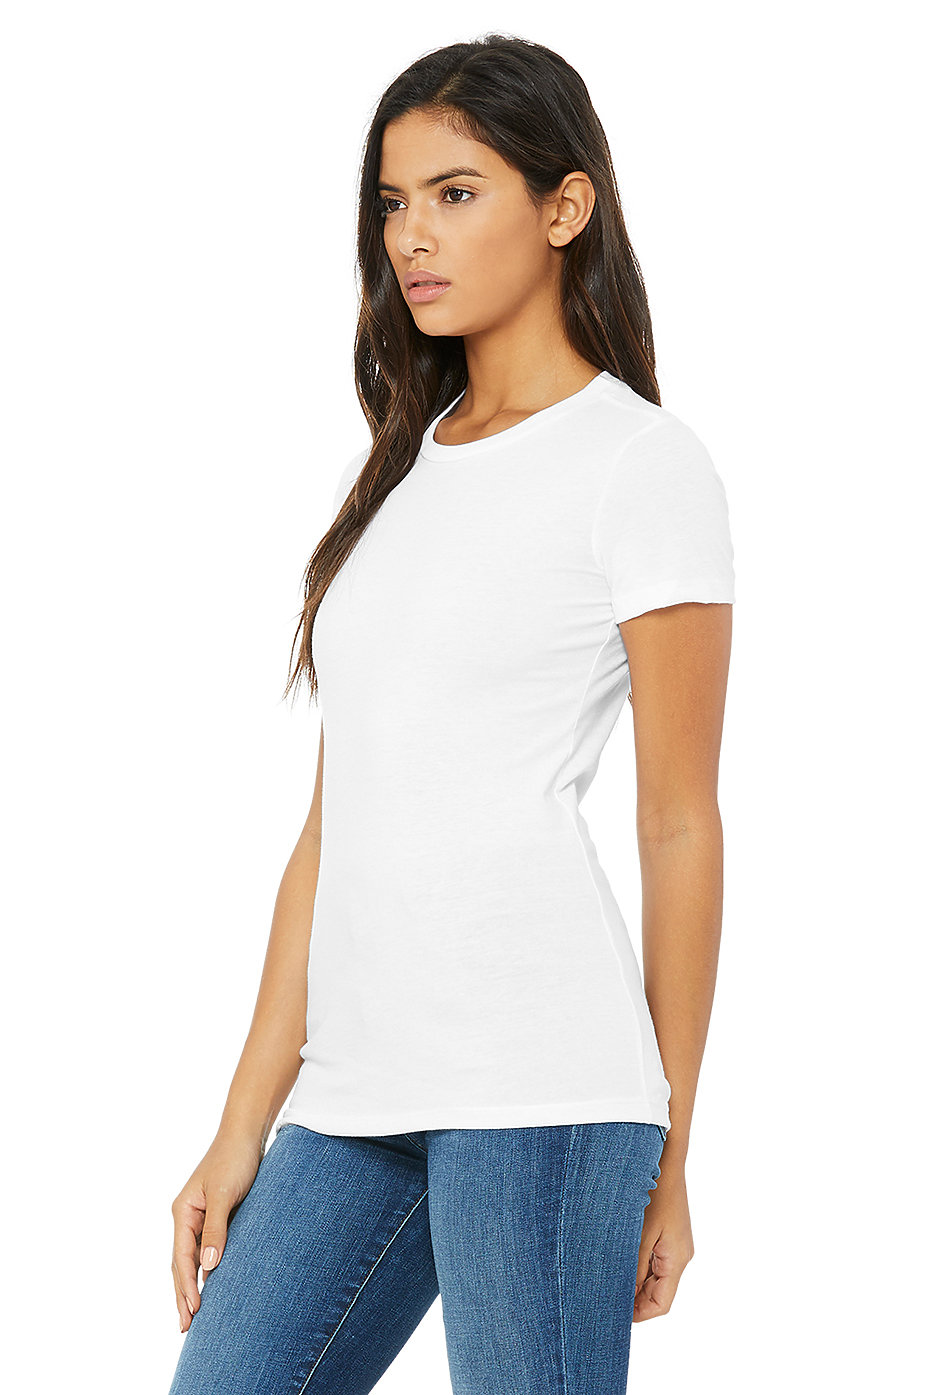 Wholesale Tee Shirts, Bulk, Plain Blank T Shirts, Womens Wholesale  Clothing Distributors